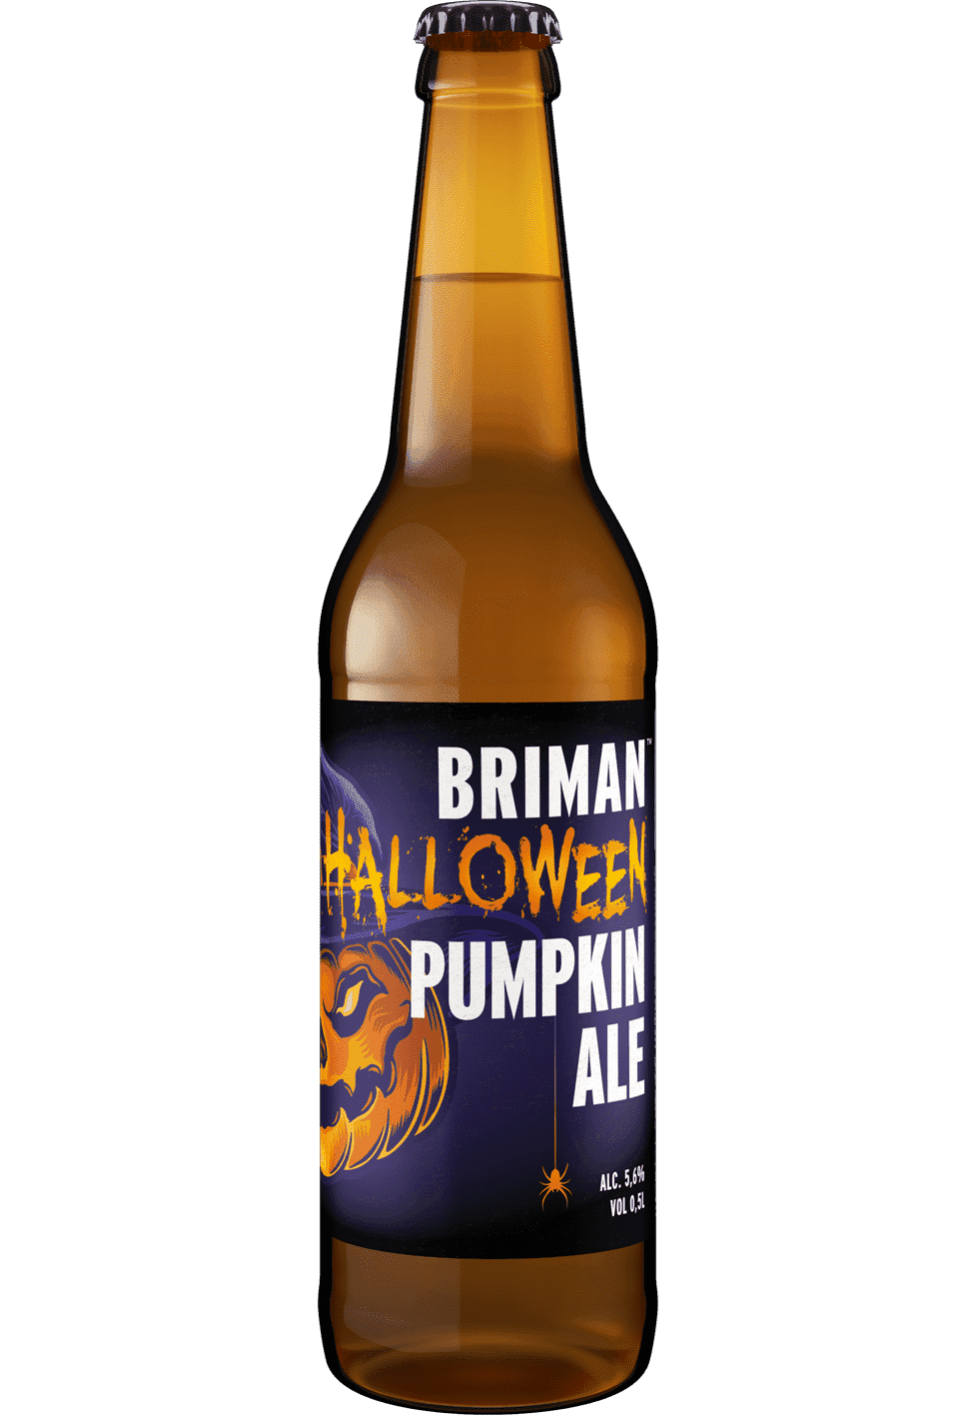 Briman Halloween Pumpkin Ale